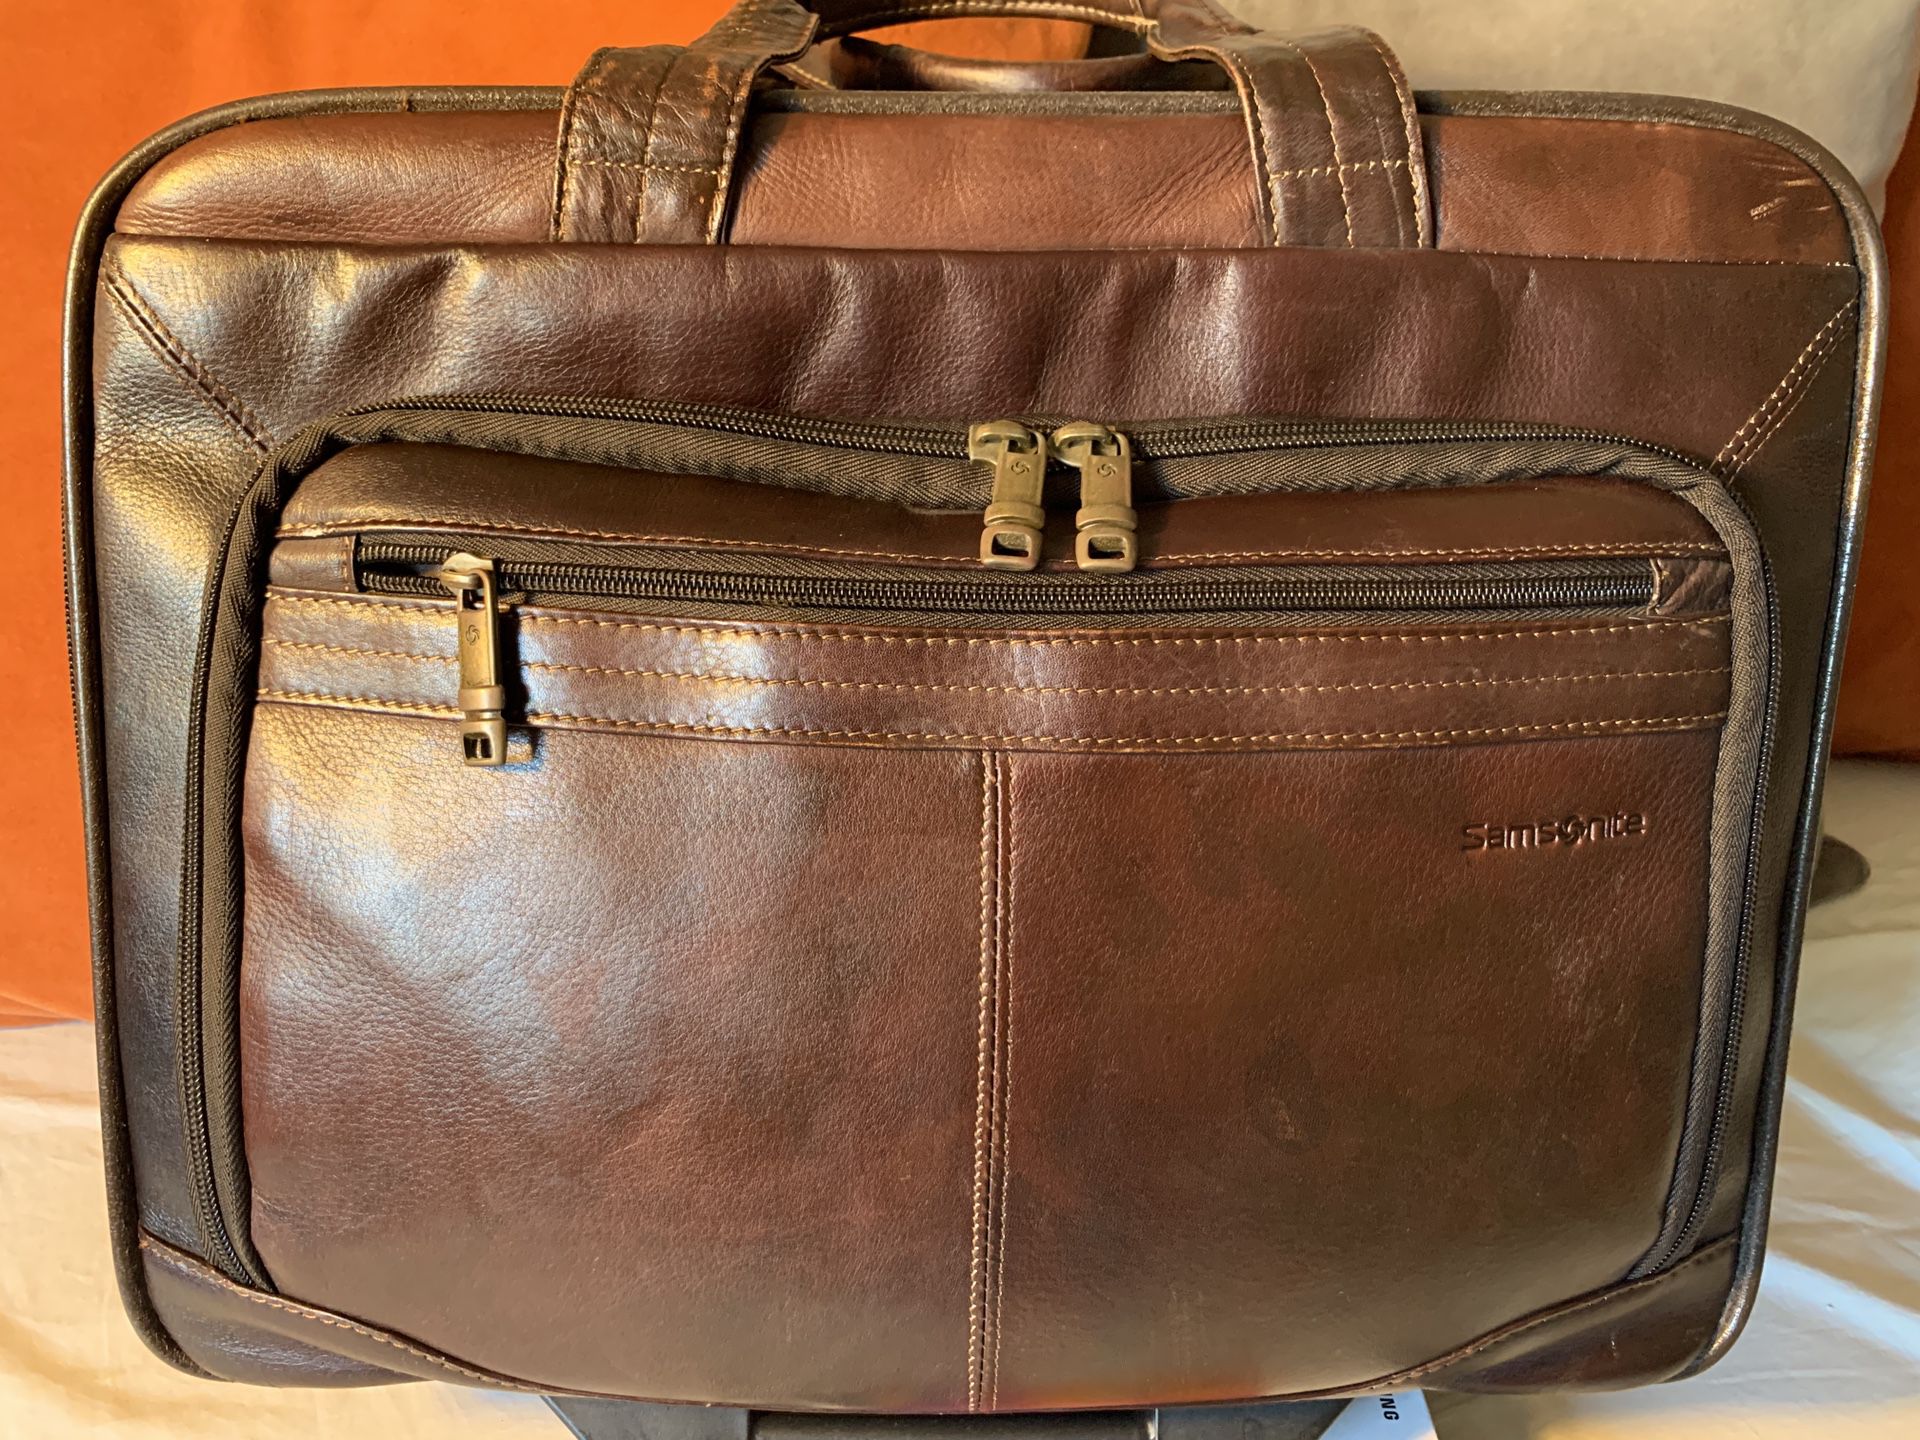 Samsonite Carry-On Leather Bag